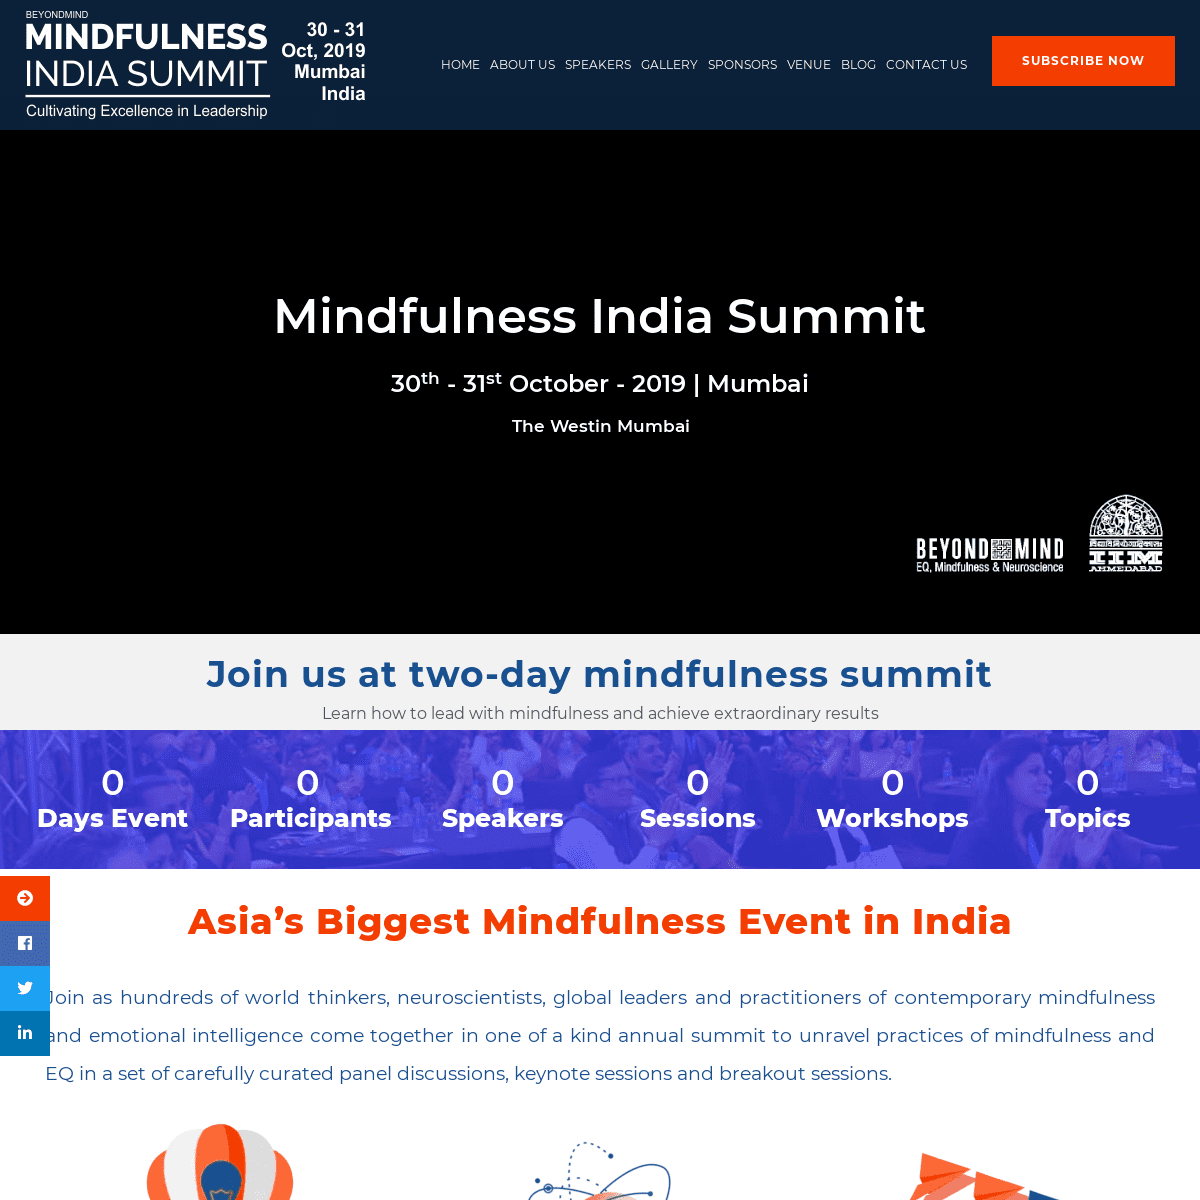 A complete backup of mindfulnessindiasummit.com